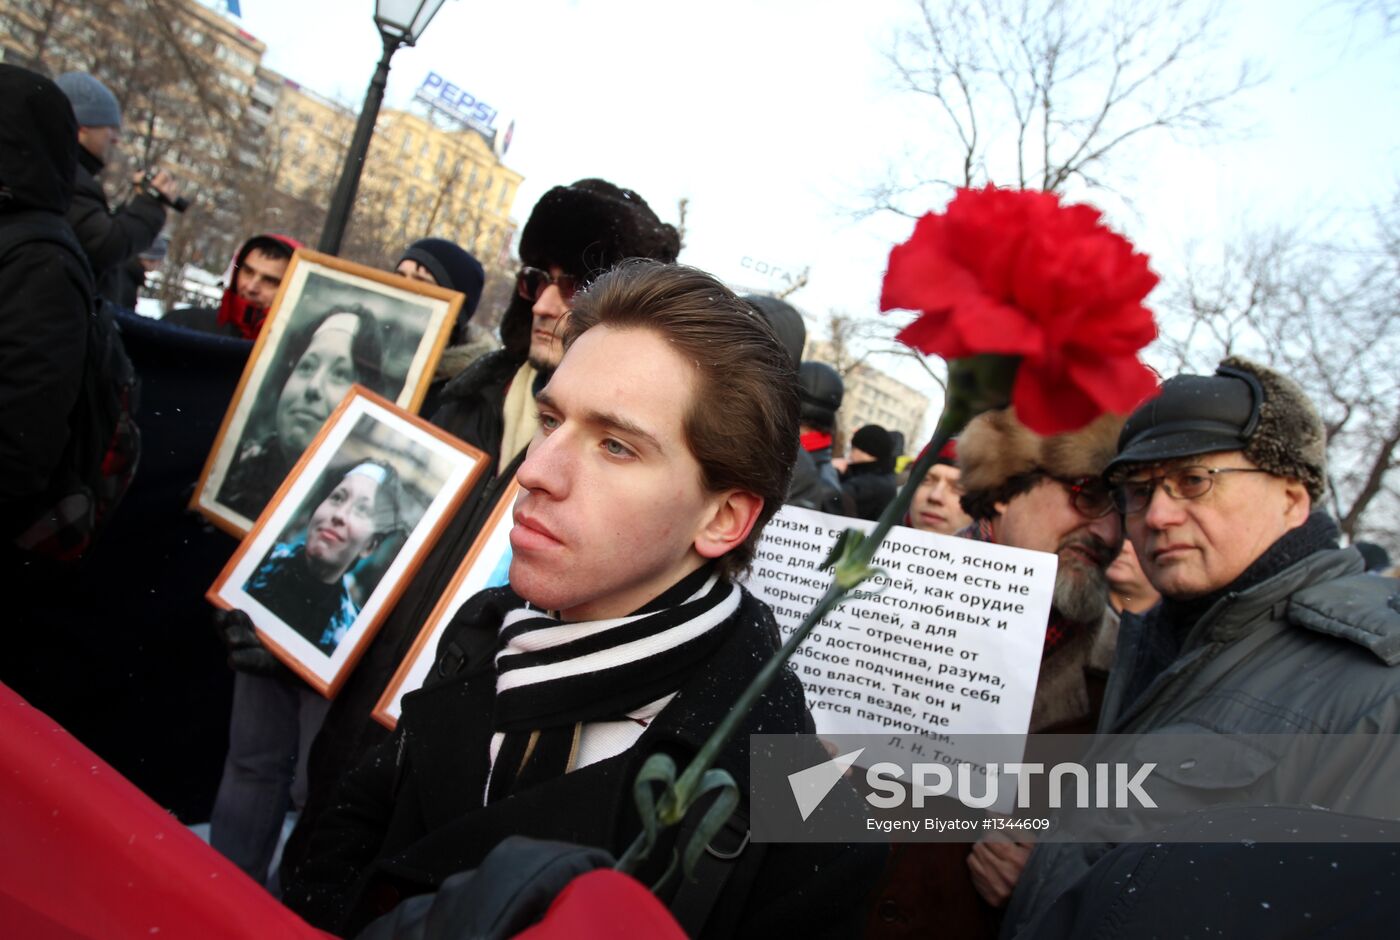 March in memory of Stanislav Markelov and Anastasia Baburova